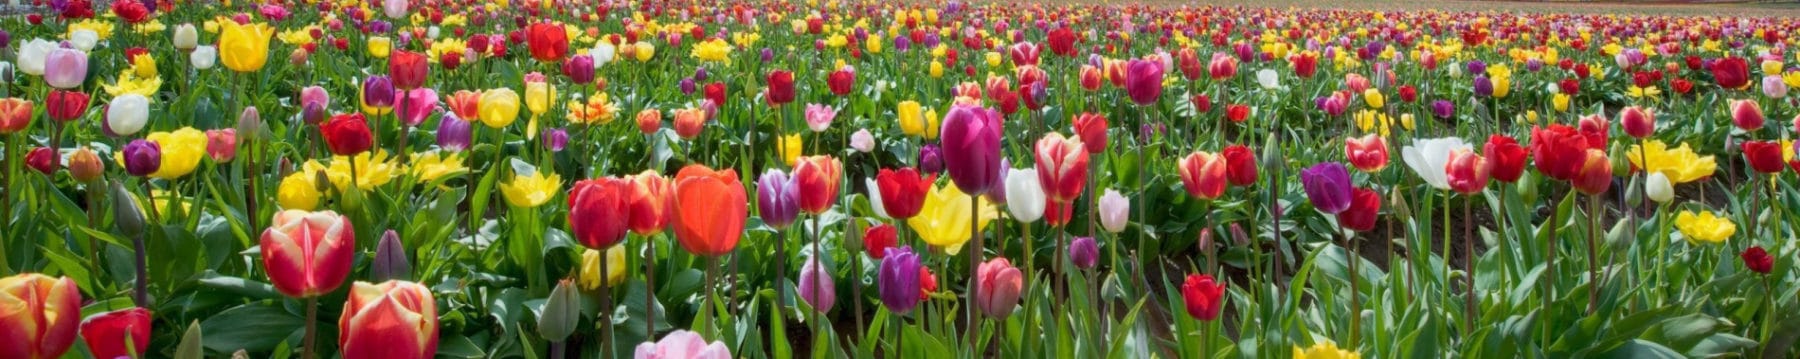 tulips-nature-flowers-field